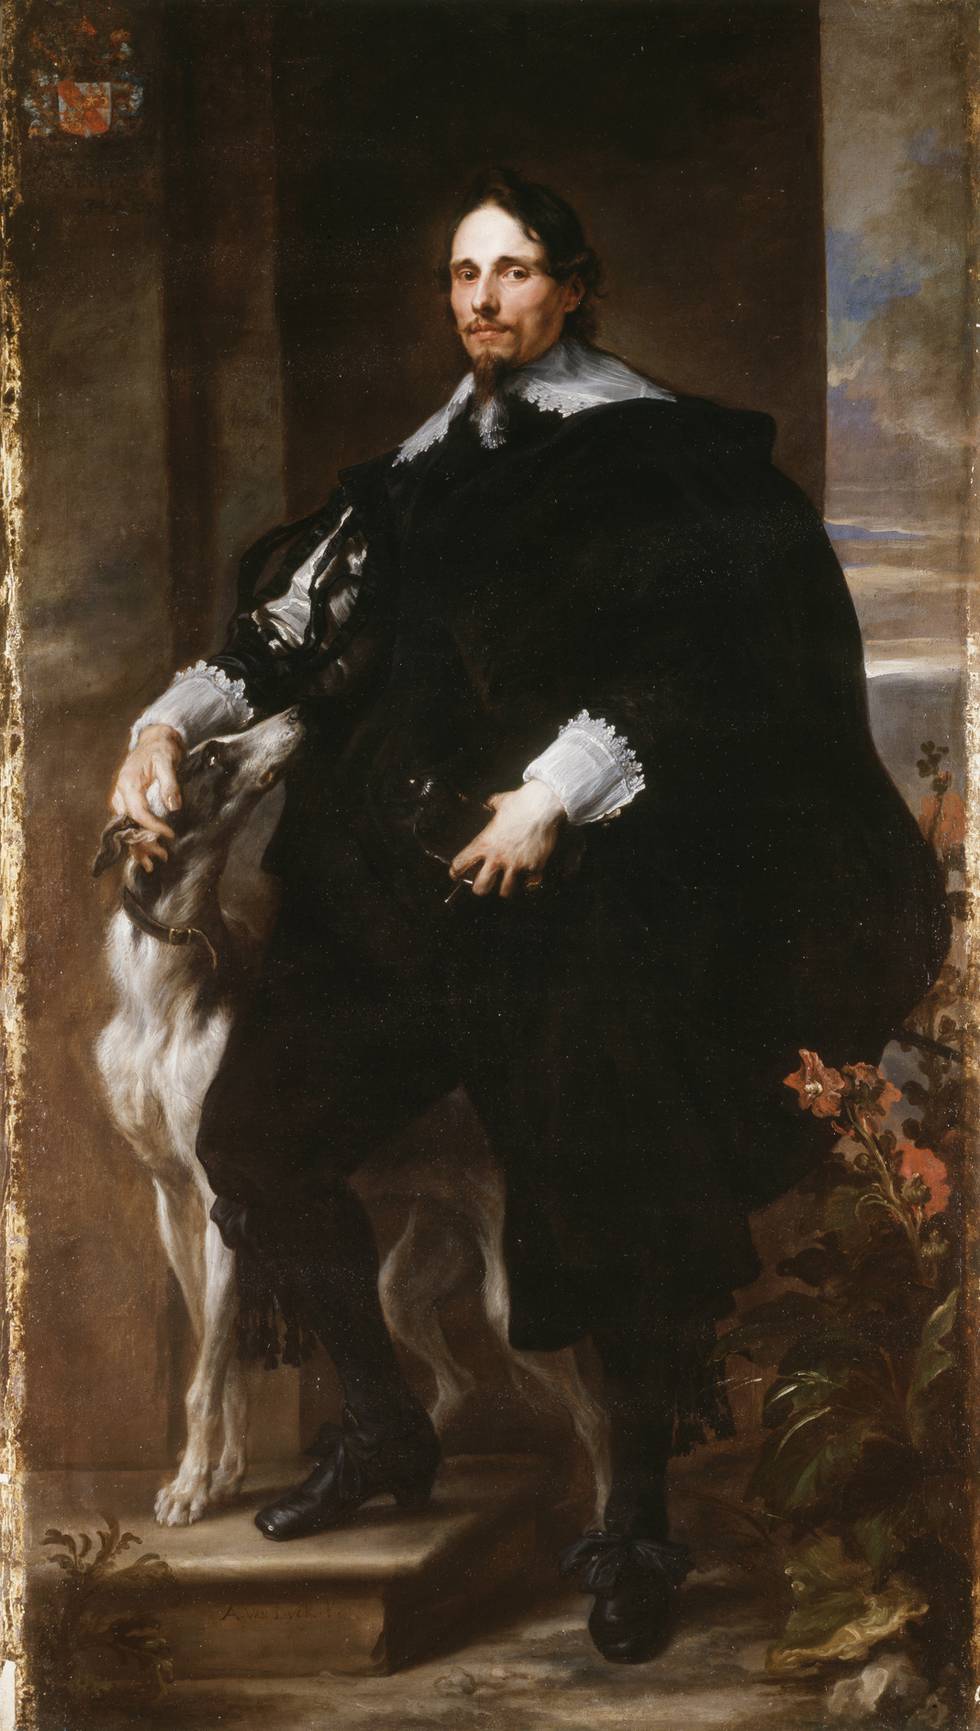 A painting of a man with a beard alongside a dog